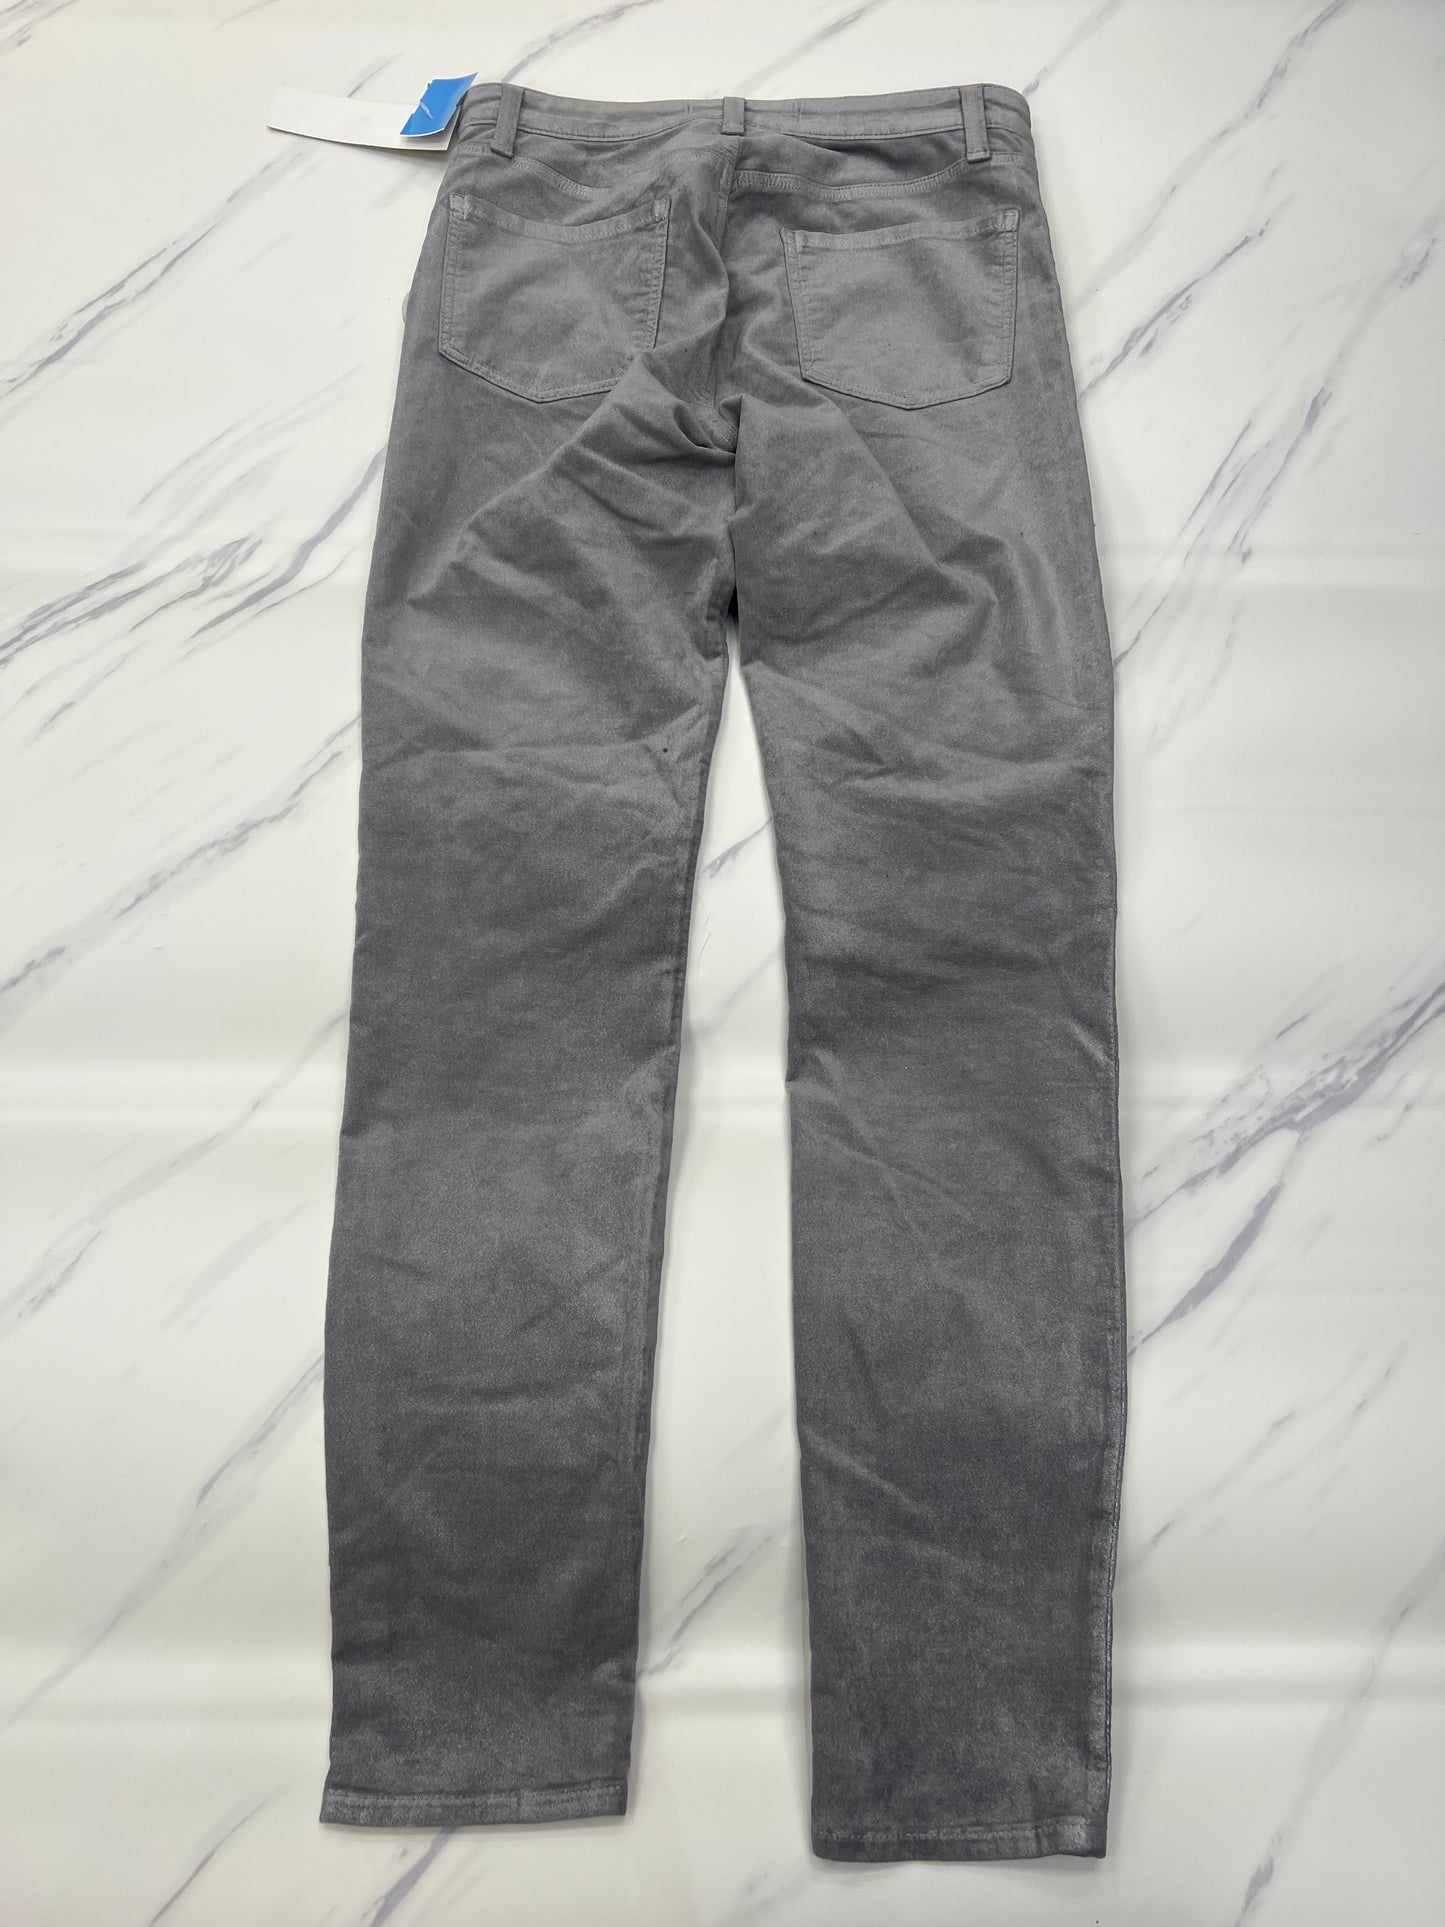 Jeans Designer By J Brand  Size: 6